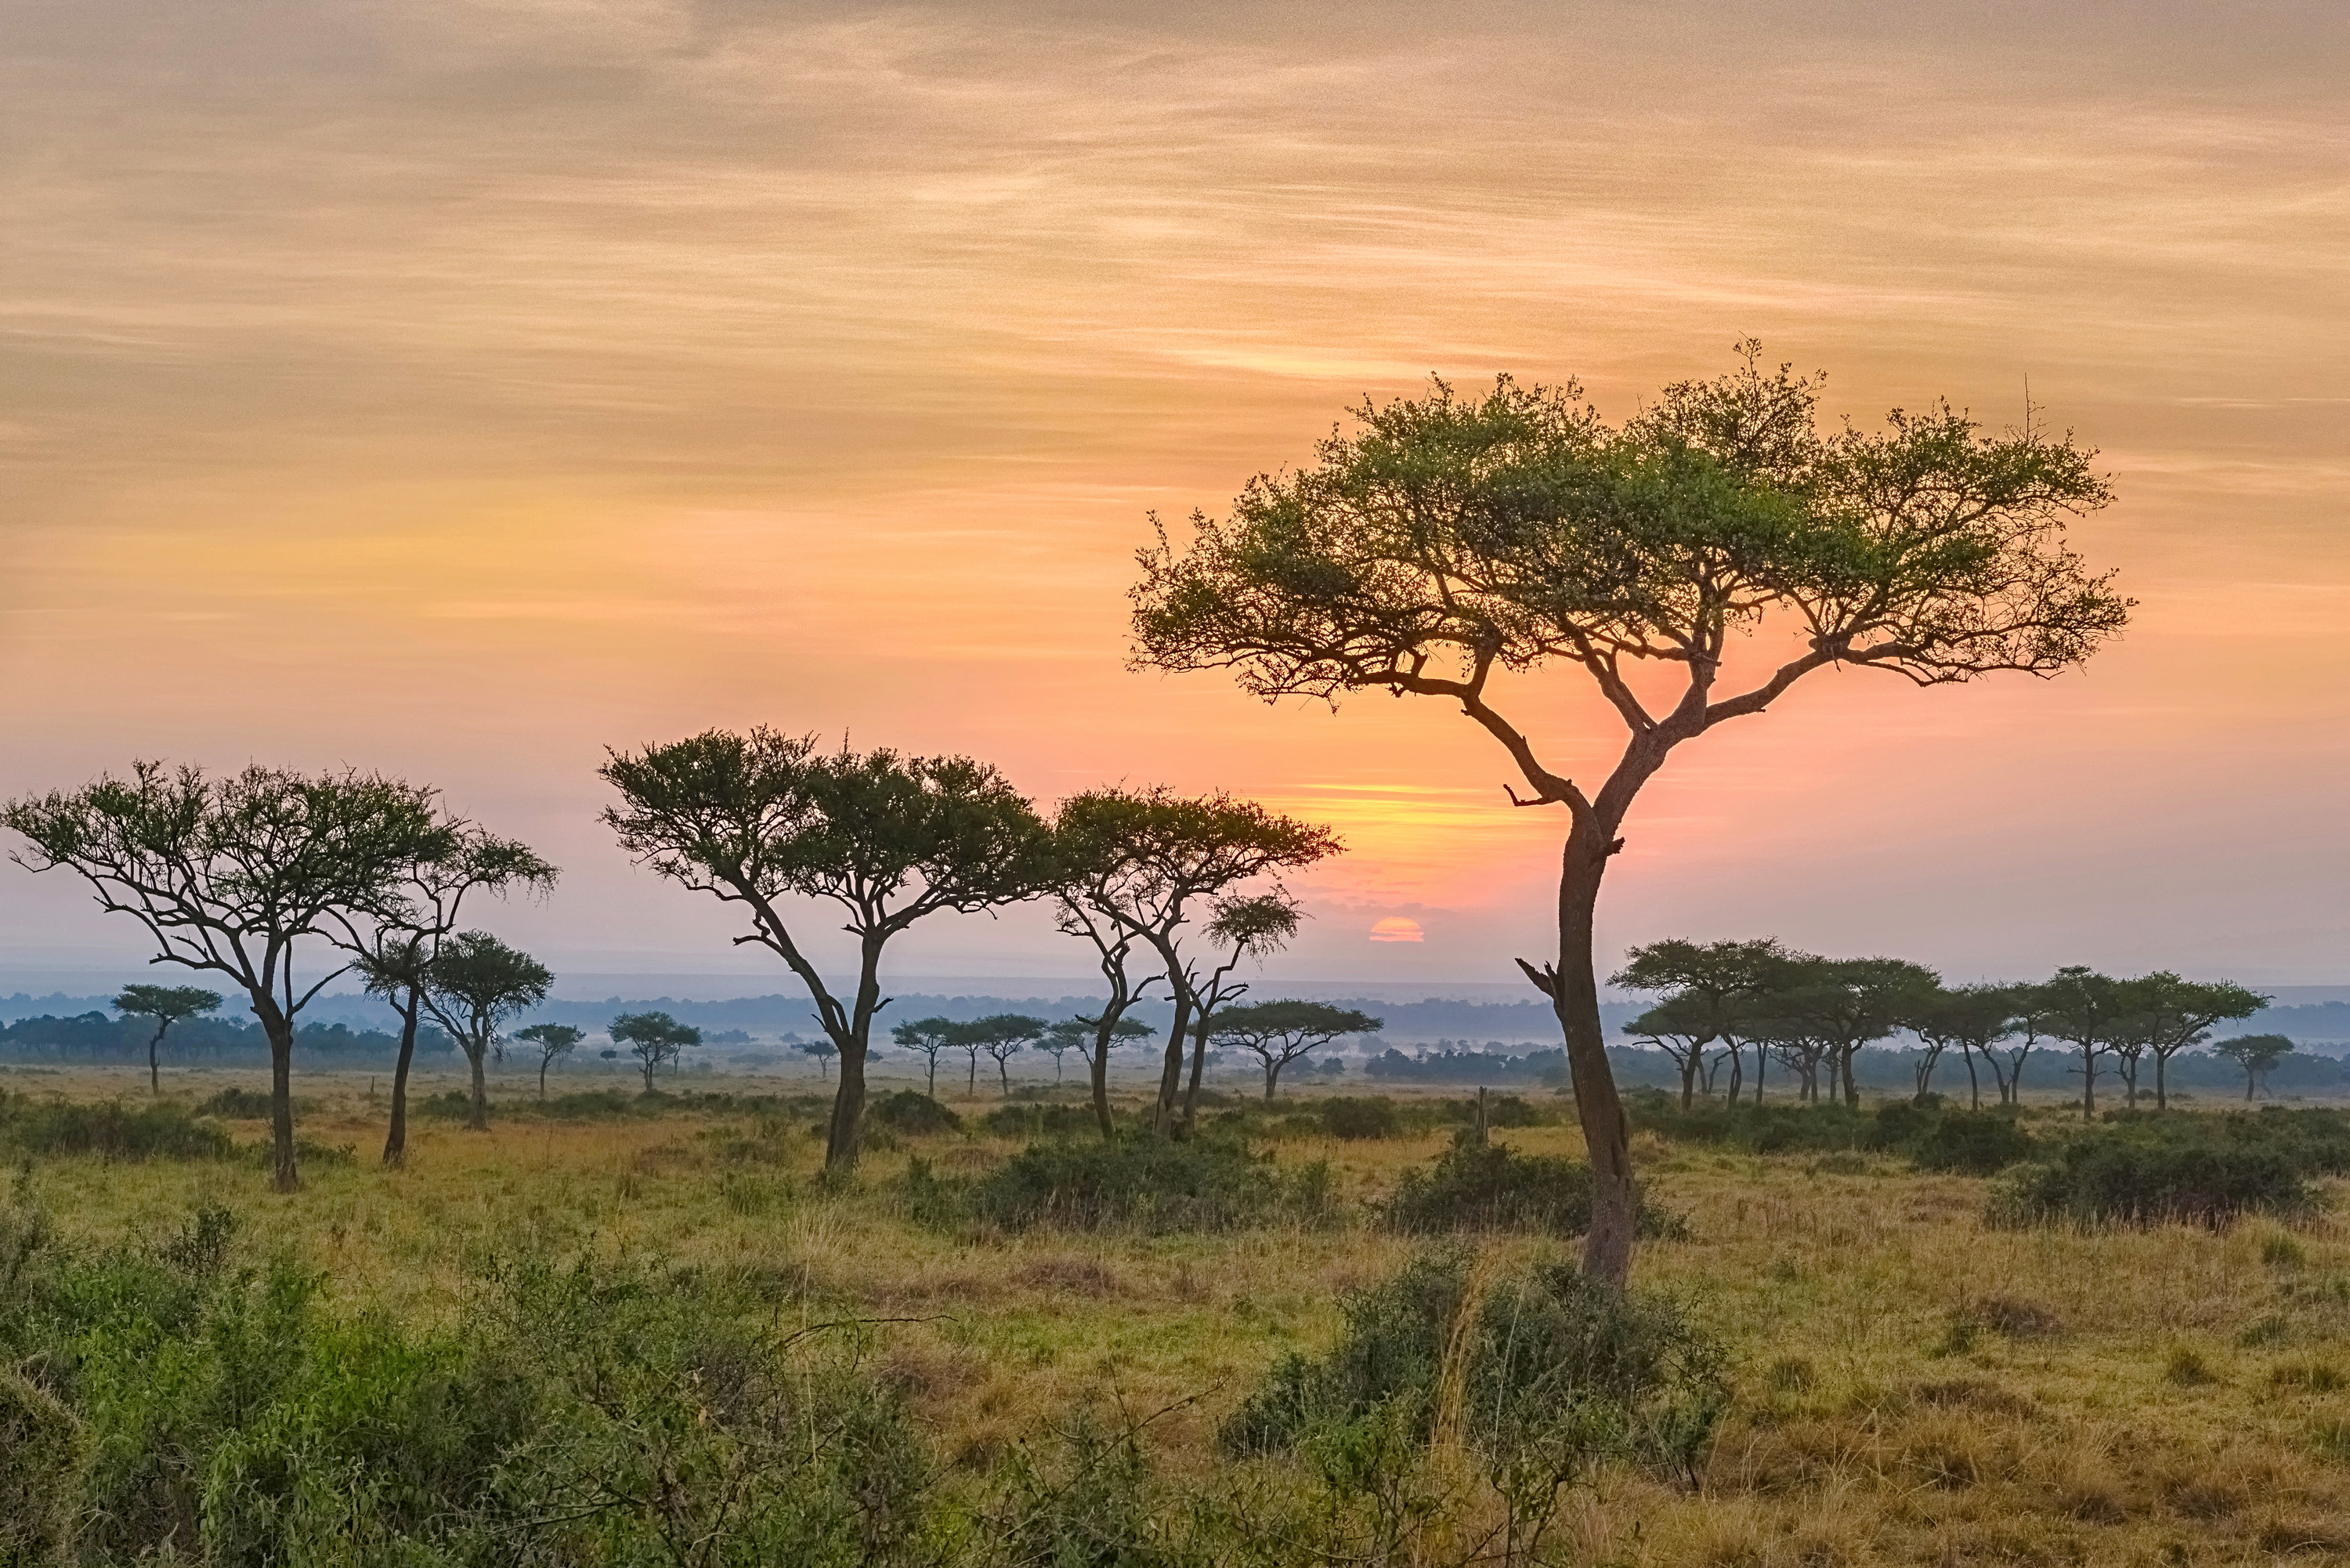 Trees at sunset in Kenya